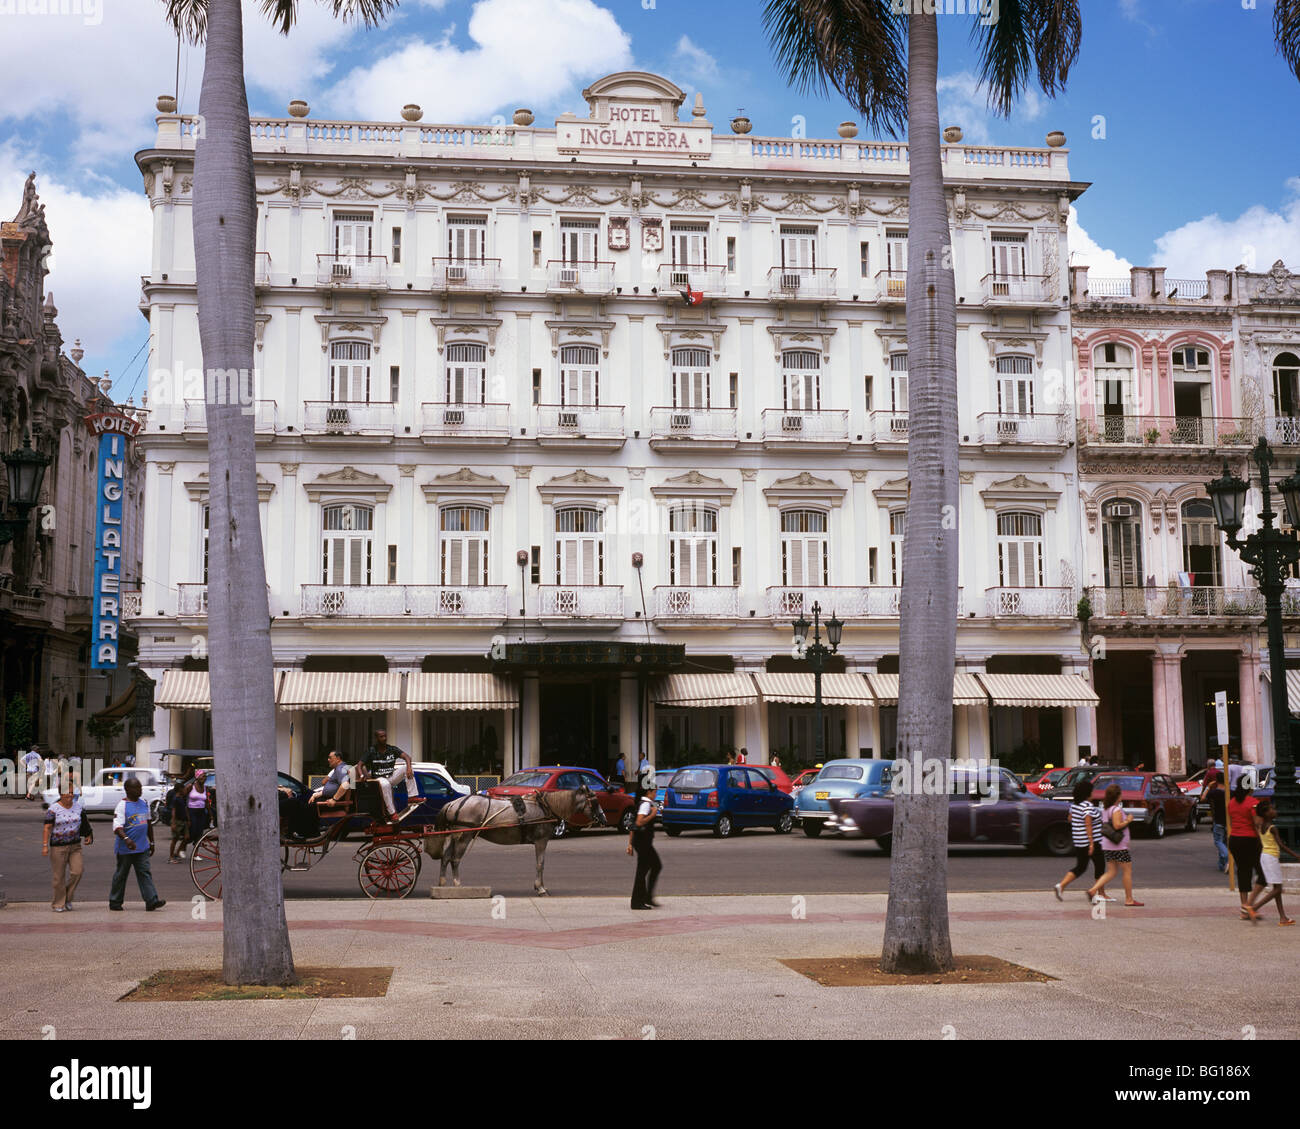 L'Hotel Inglaterra, Parque Central, La Habana Vieja, Cuba, West Indies, America Centrale Foto Stock